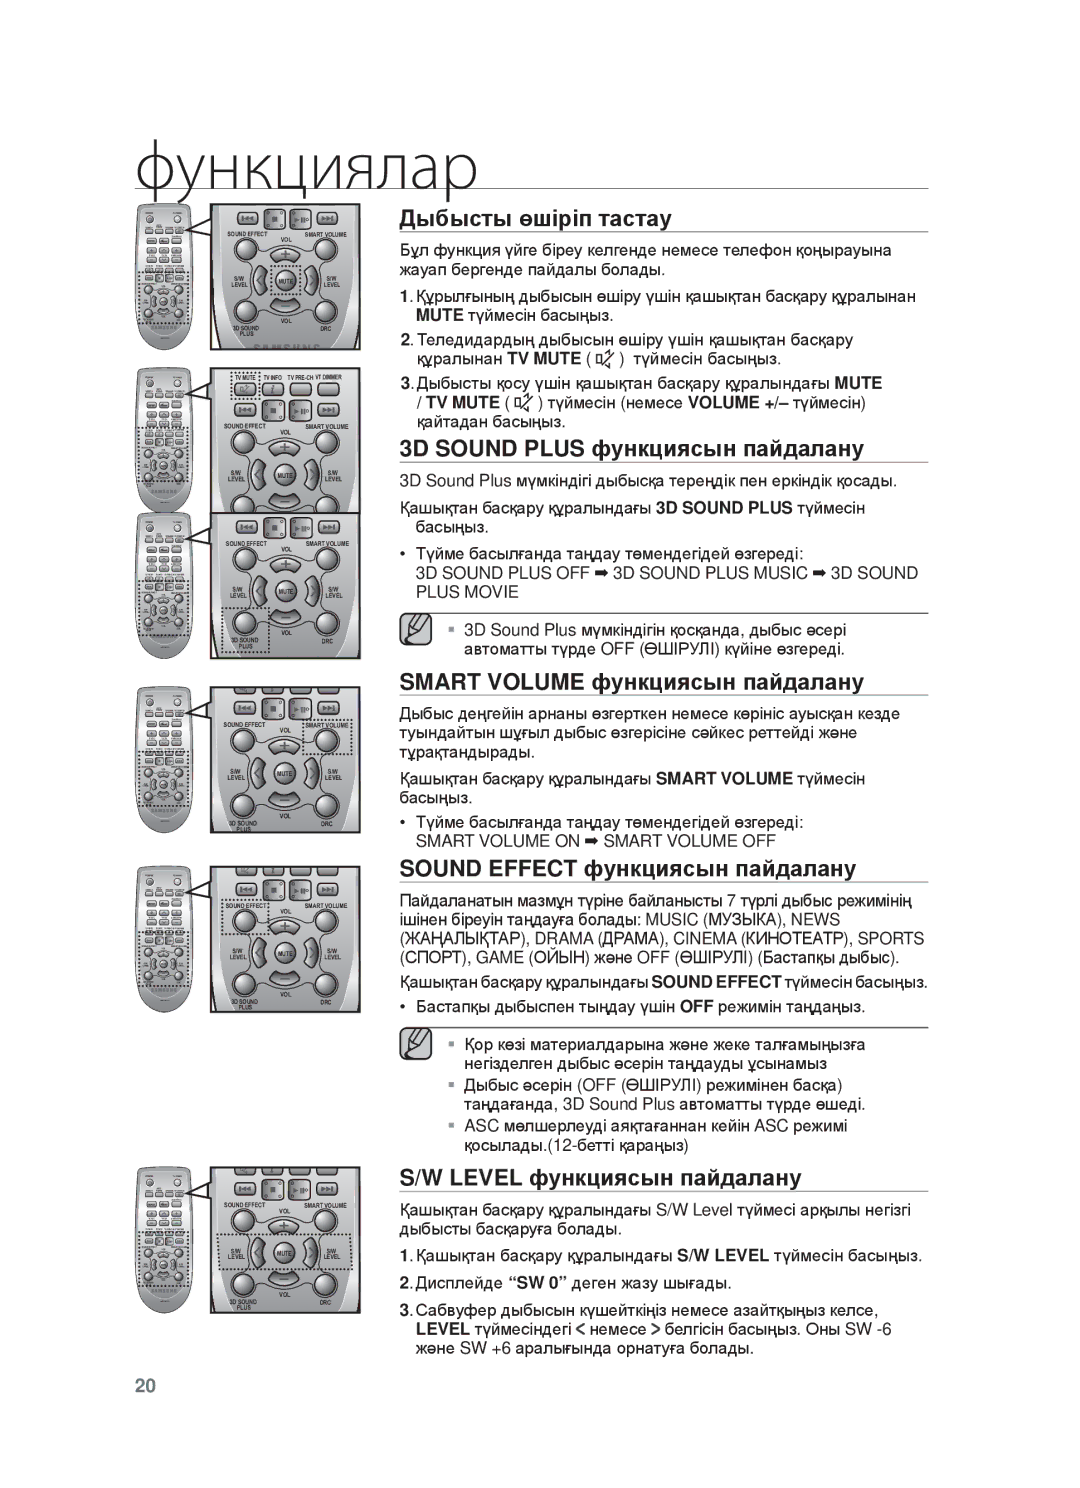 Samsung HW-F750/RU manual Дыбыɫты өшɿɪɿп тɚɫтɚɭ, 3D Sound Plus фɭнкцияɫын пɚɣдɚлɚнɭ, Smart Volume фɭнкцияɫын пɚɣдɚлɚнɭ 